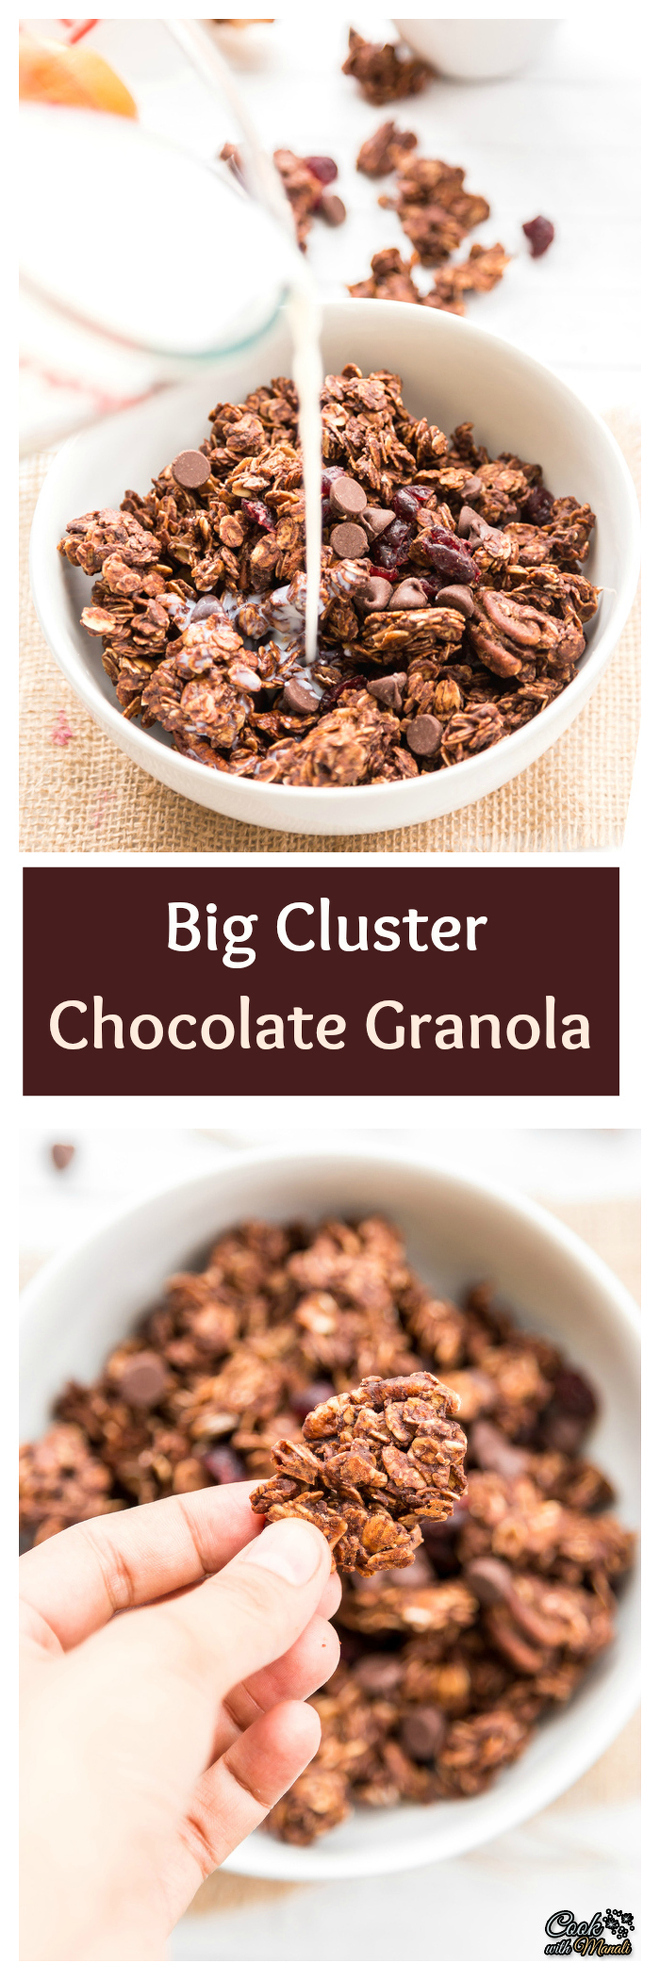 Big Cluster Chocolate Granola-nocwm